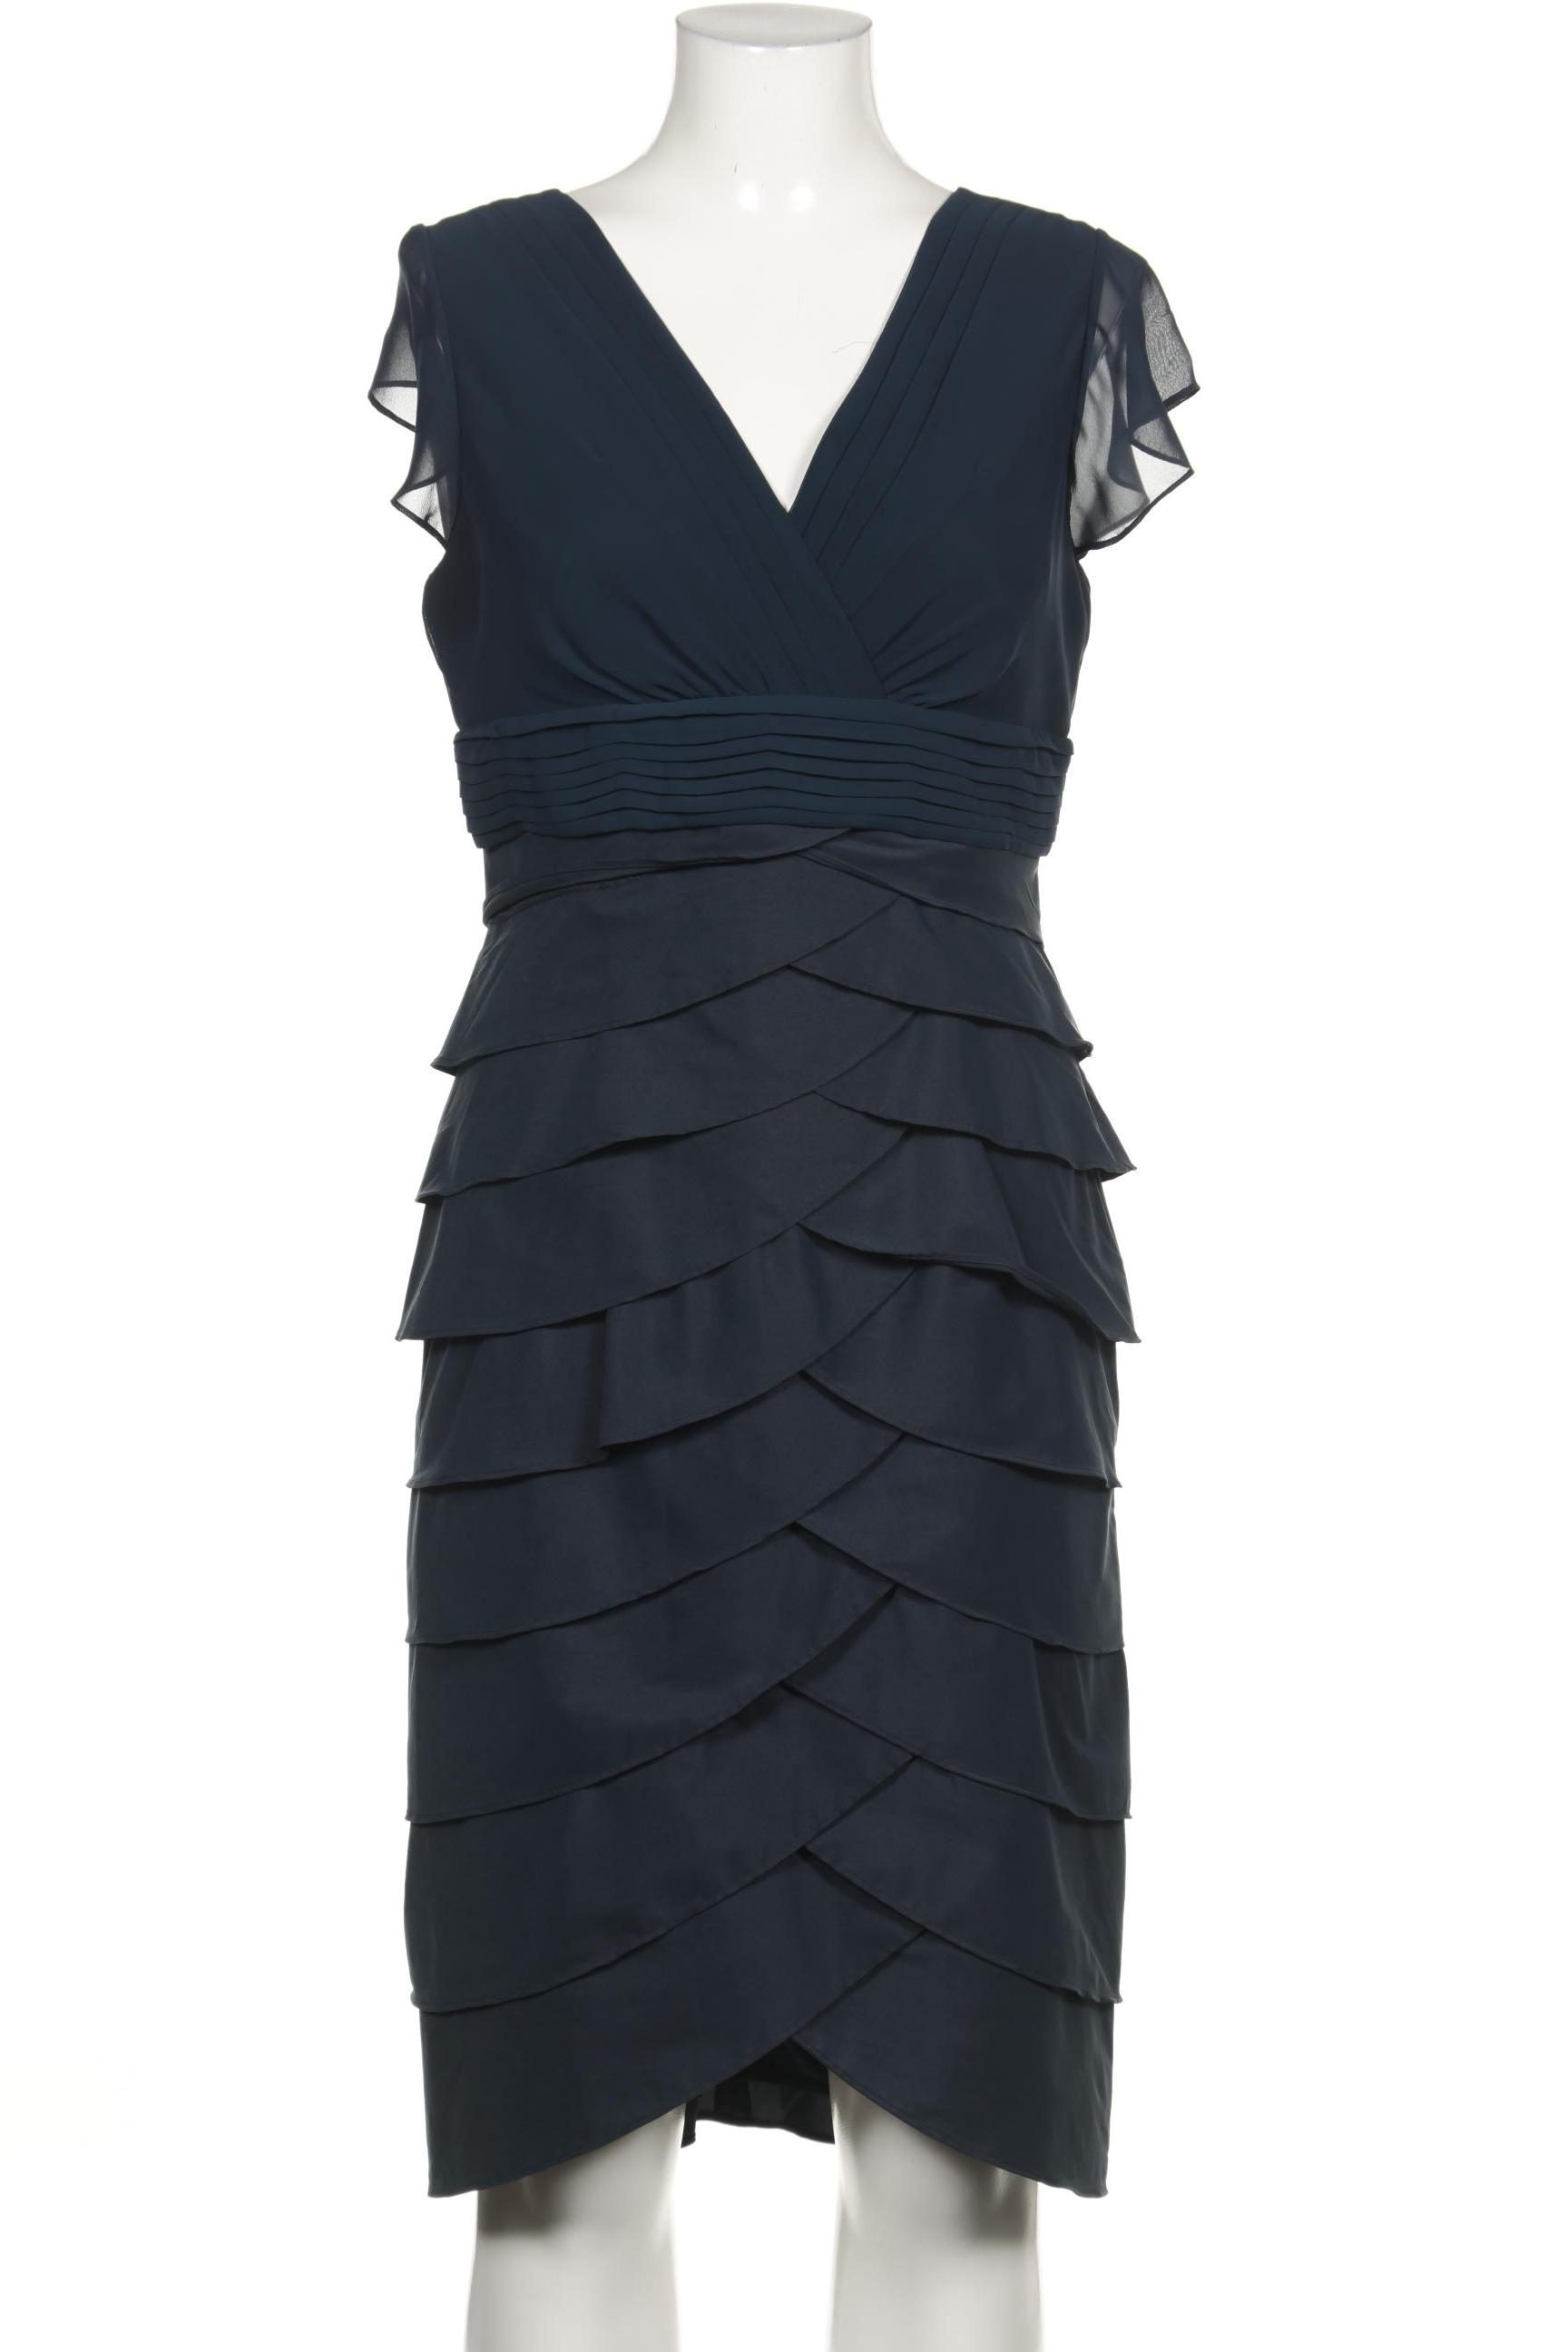 Mariposa Damen Kleid, marineblau von Mariposa